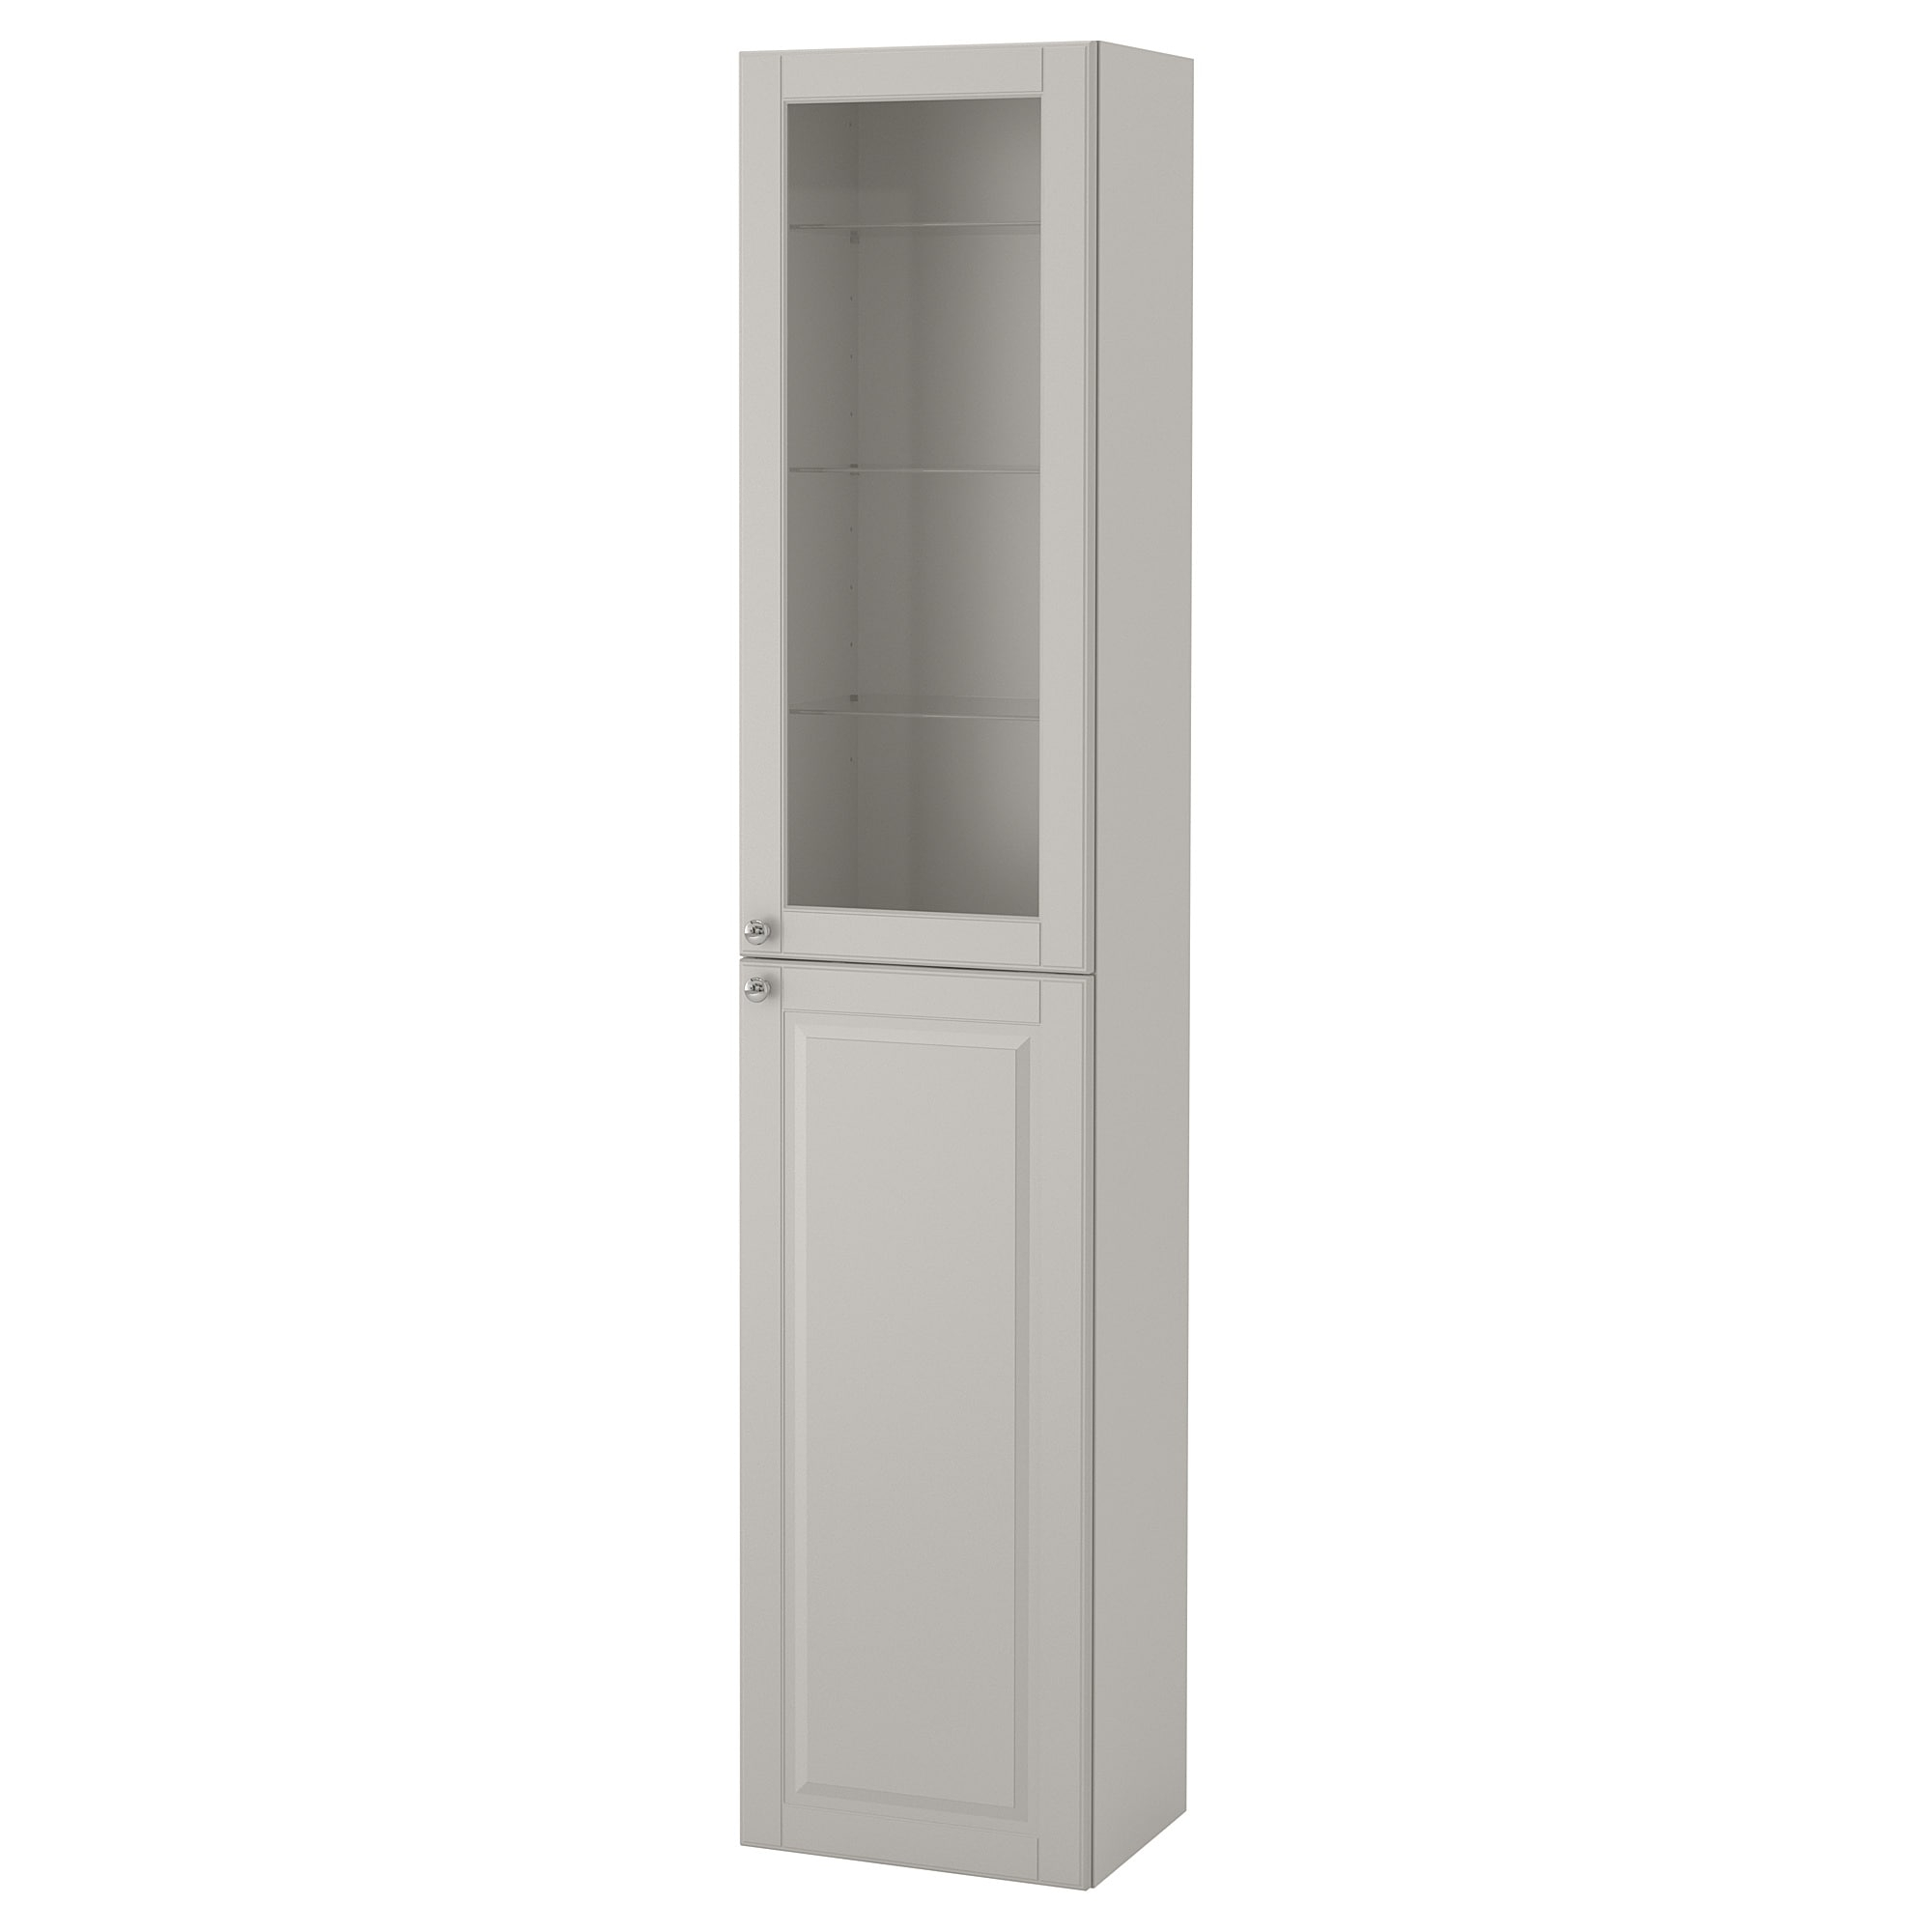 Wicker Bathroom Storage Cabinets Cabinet Ideas regarding size 2000 X 2000